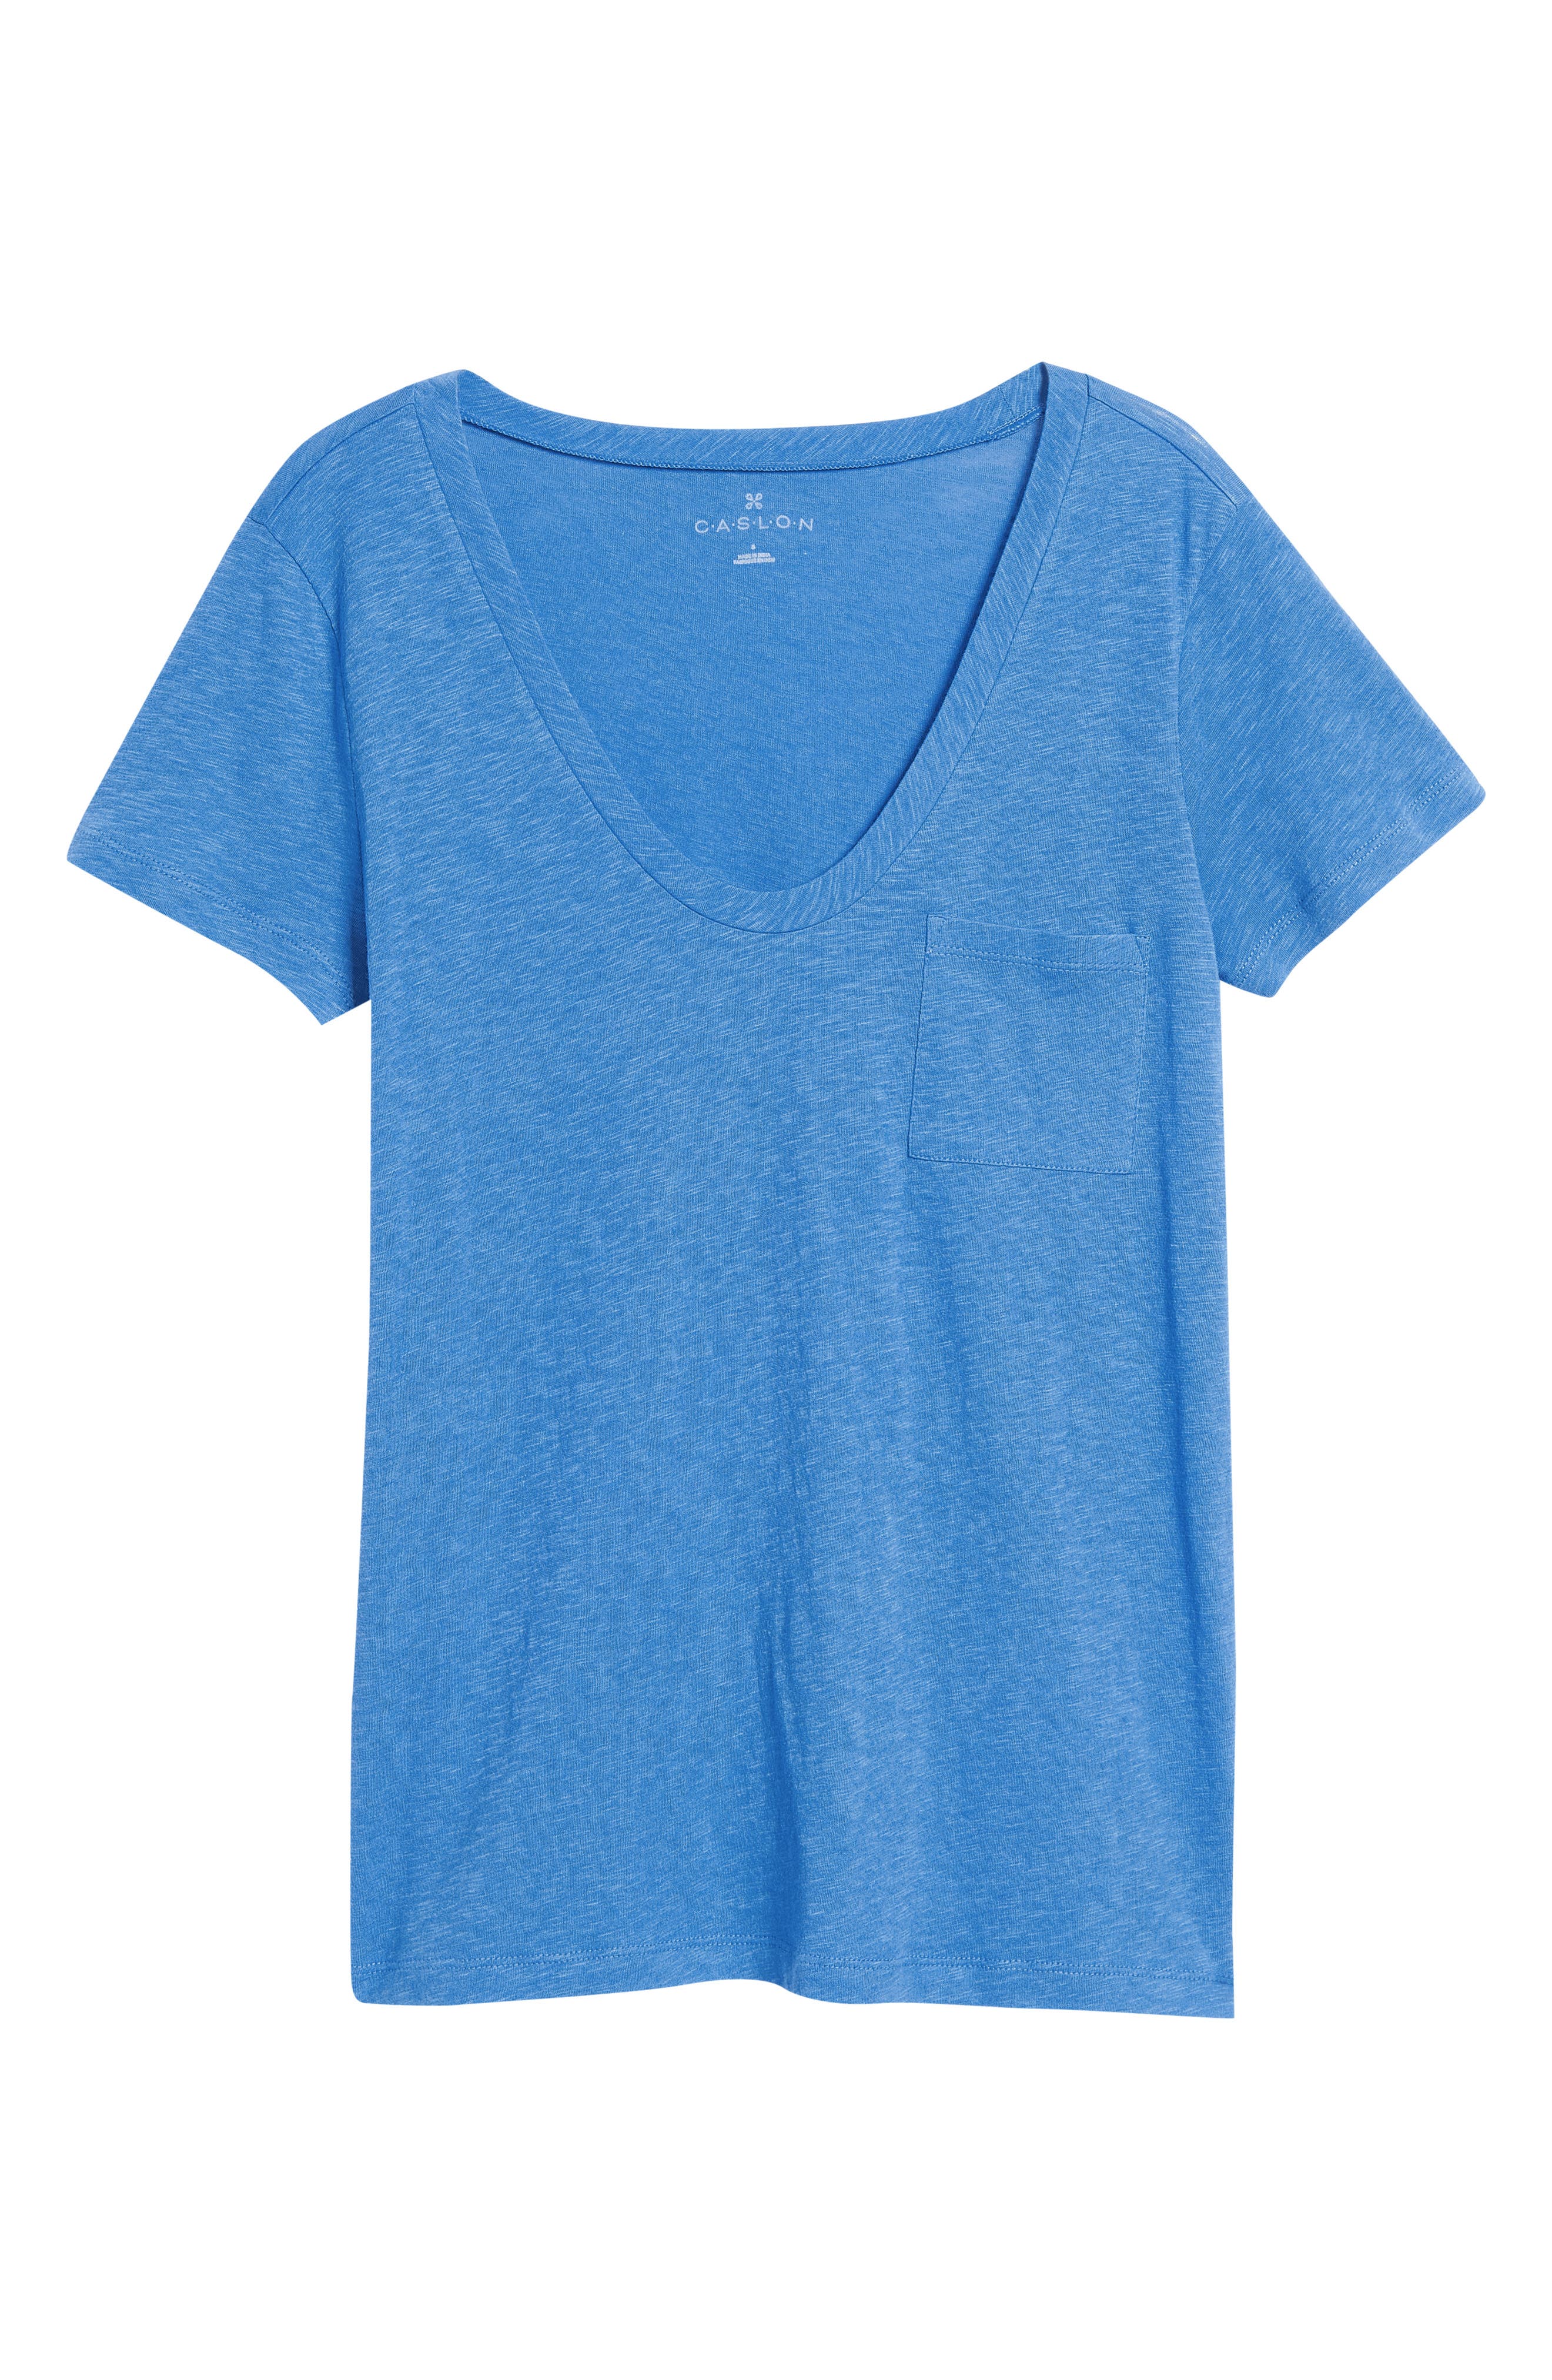 Ladies New George Blue Print Shirt Blouse size  8